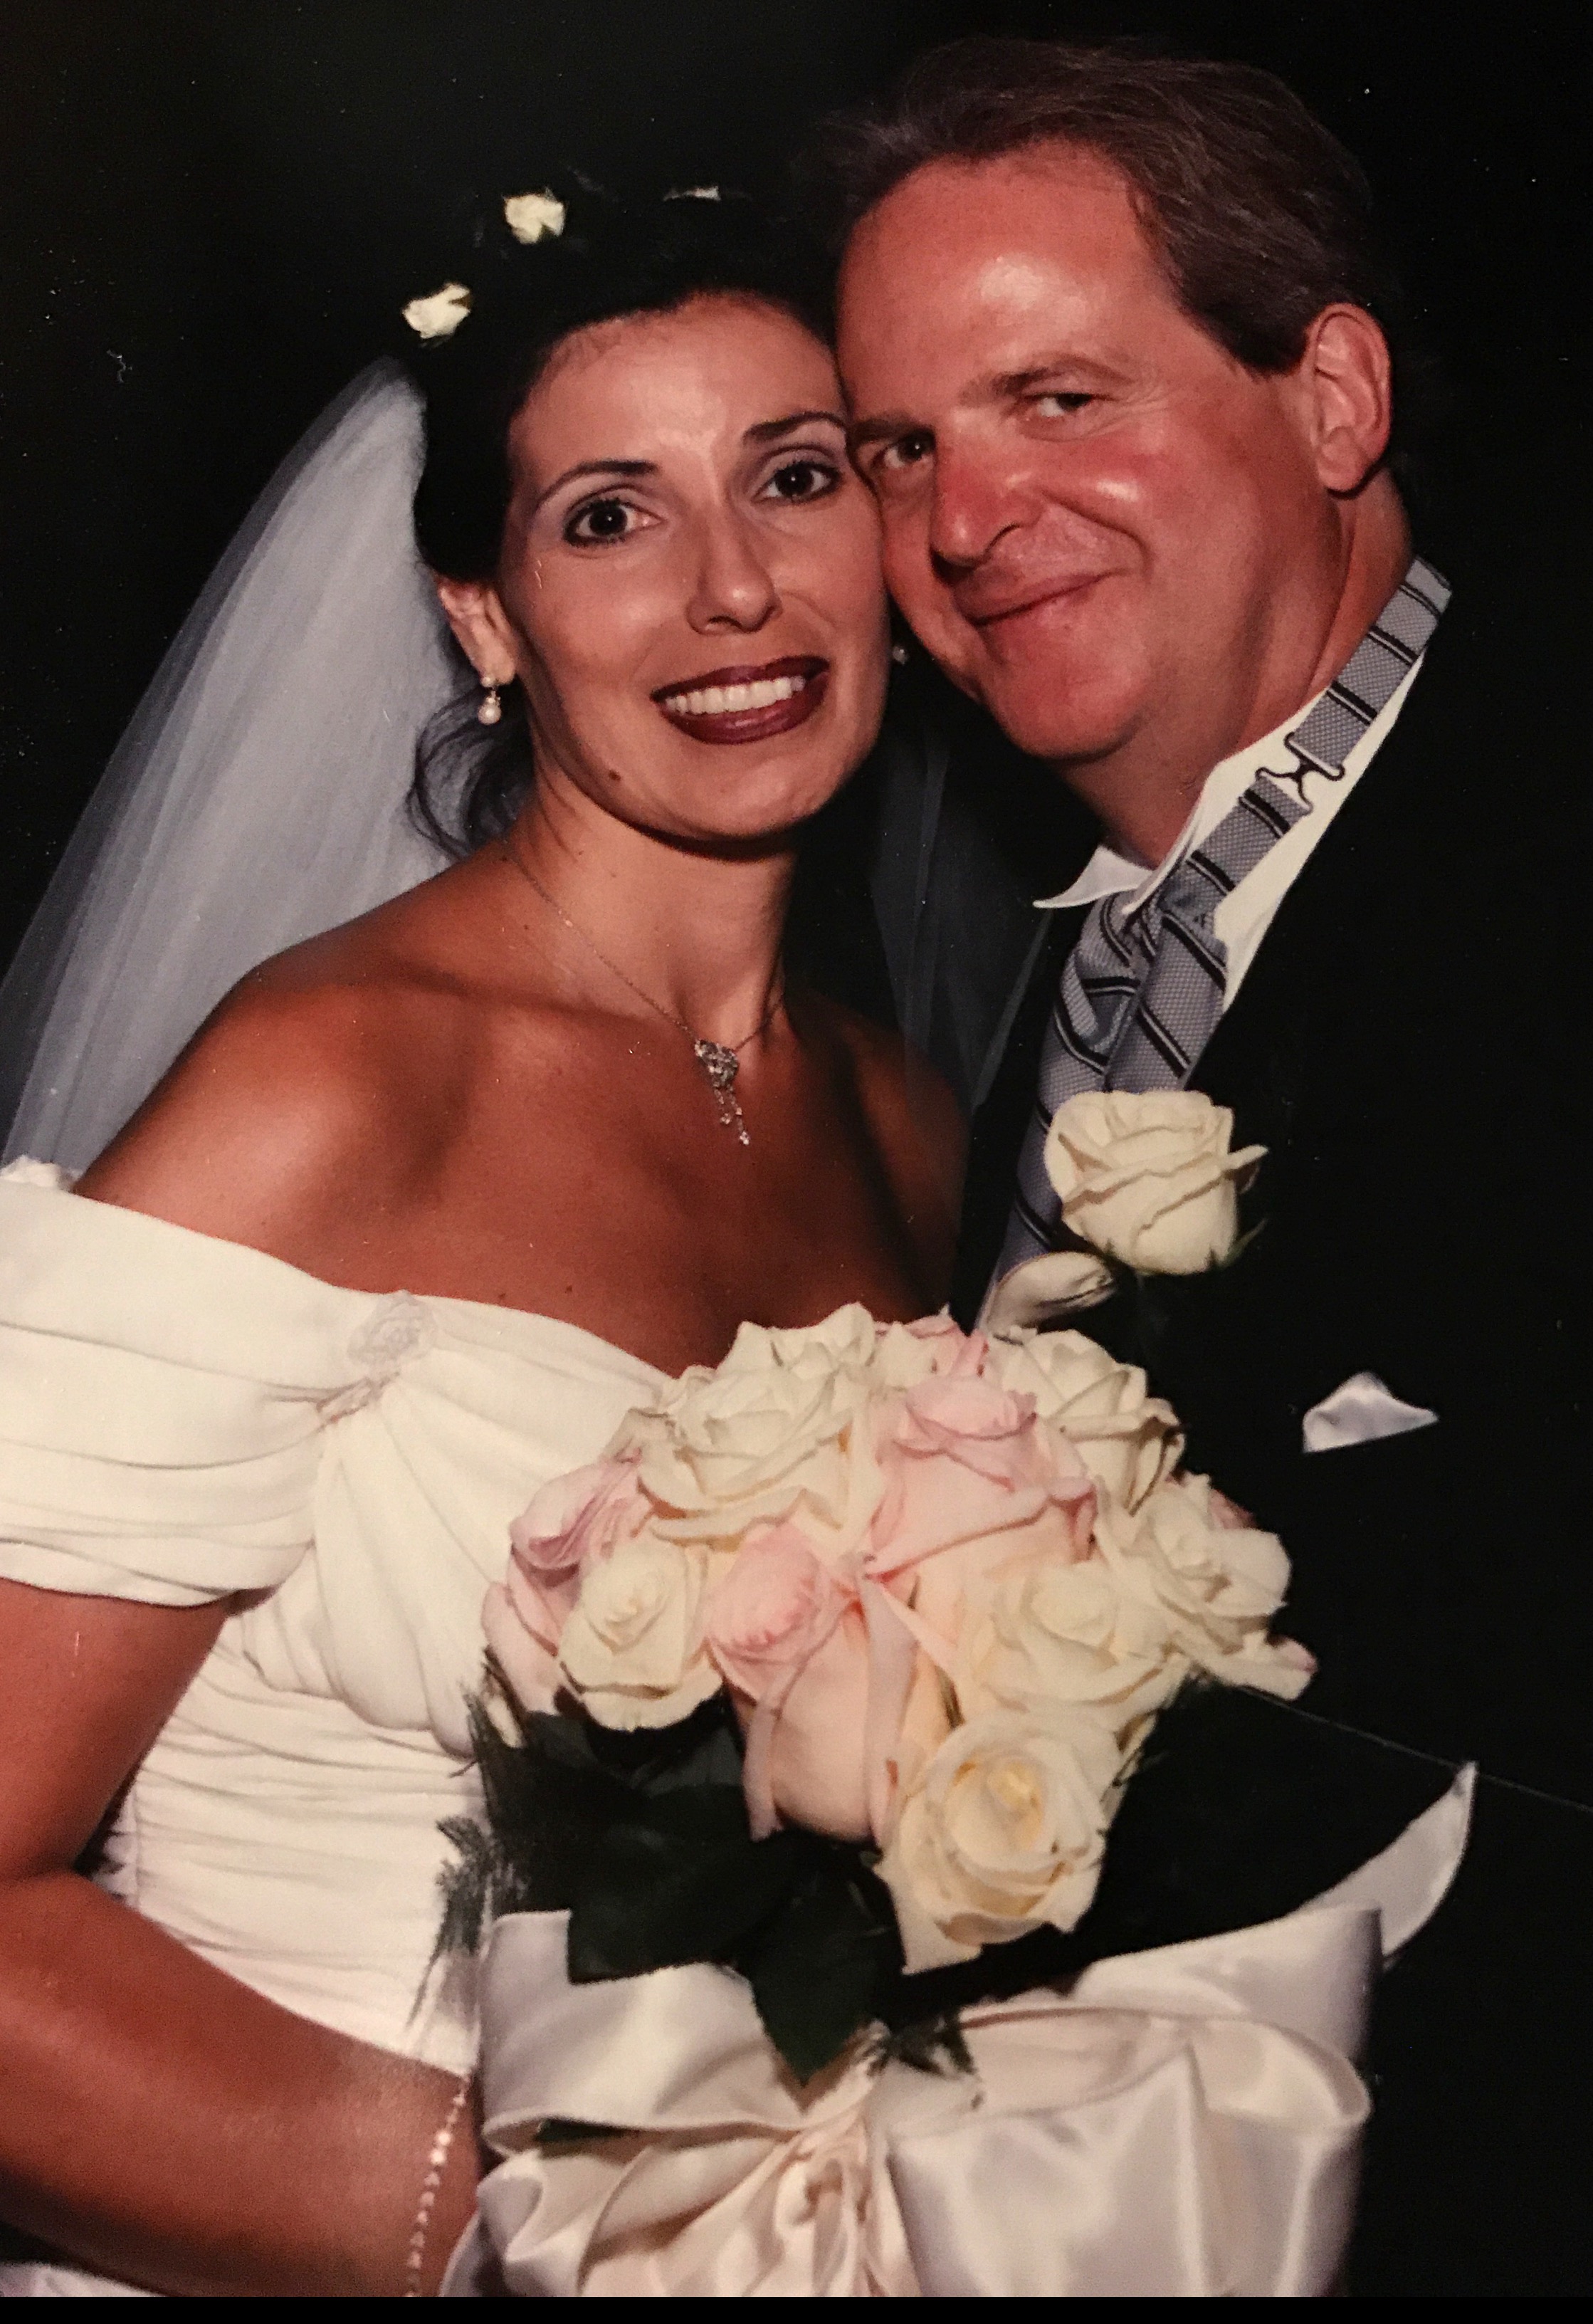 Tom & Linda's Wedding
July 11, 1999